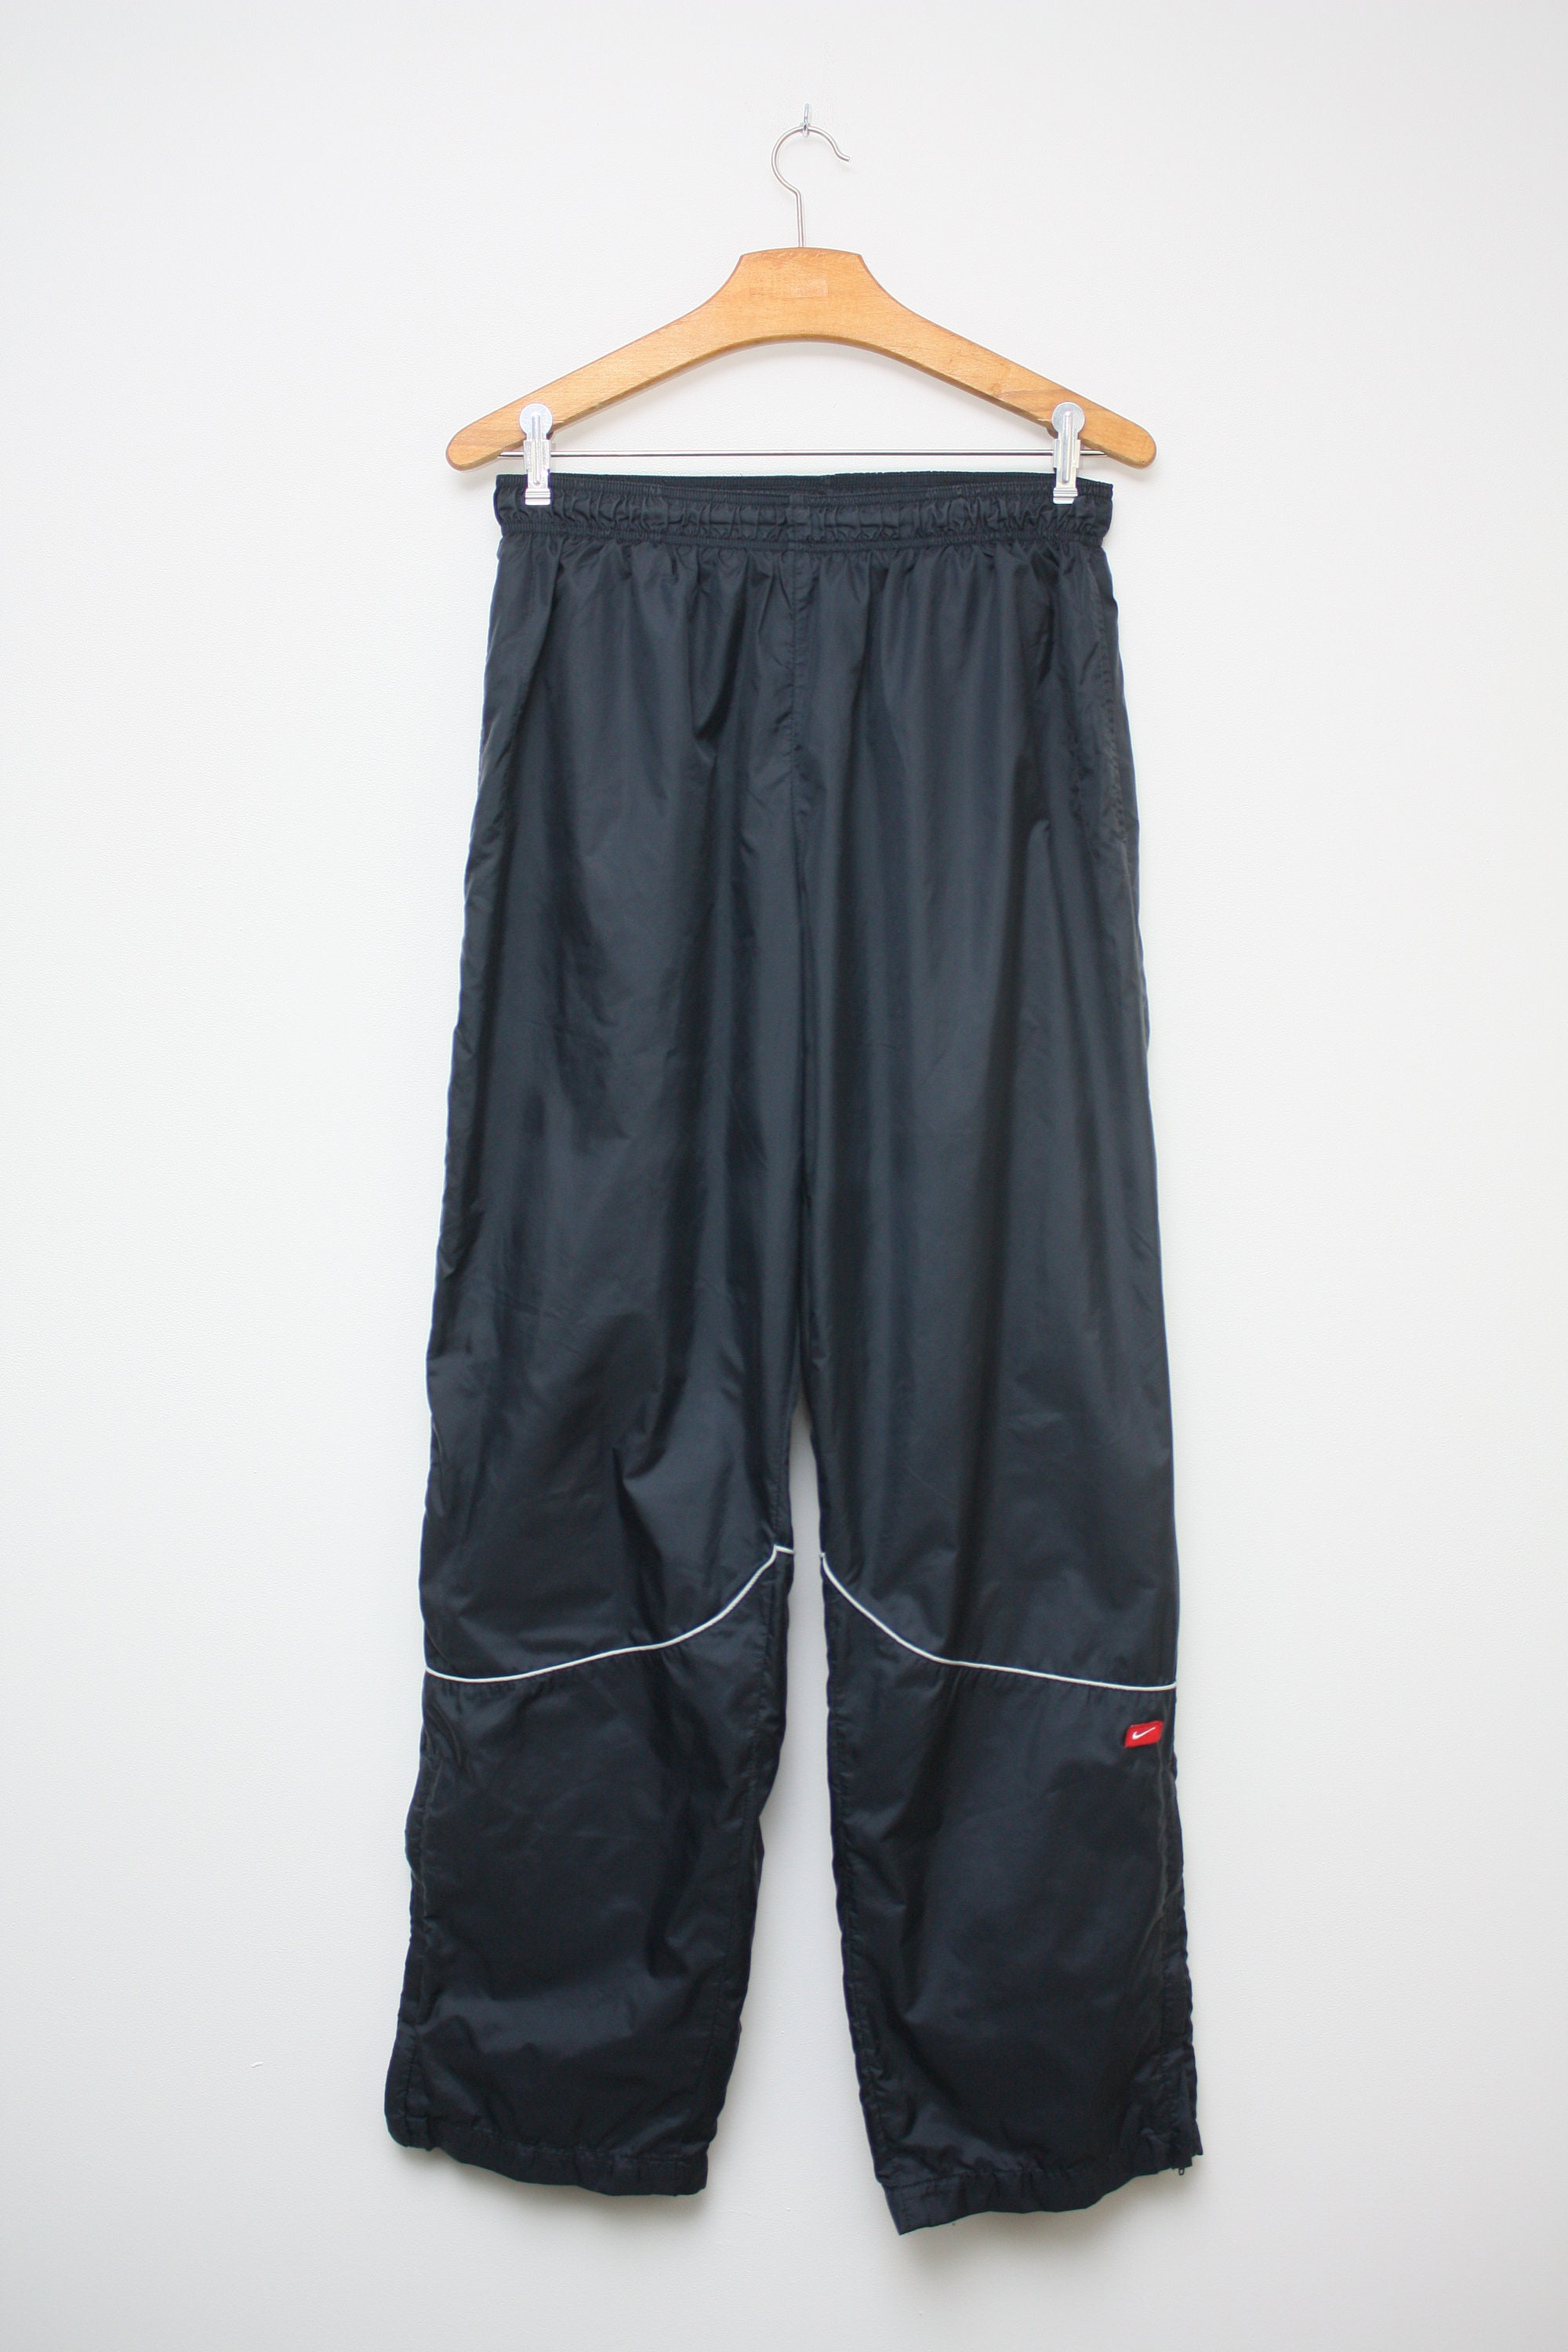 Vintage Nike Nylon Track Pants Embroided Logo Swoosh size М 90s y2k